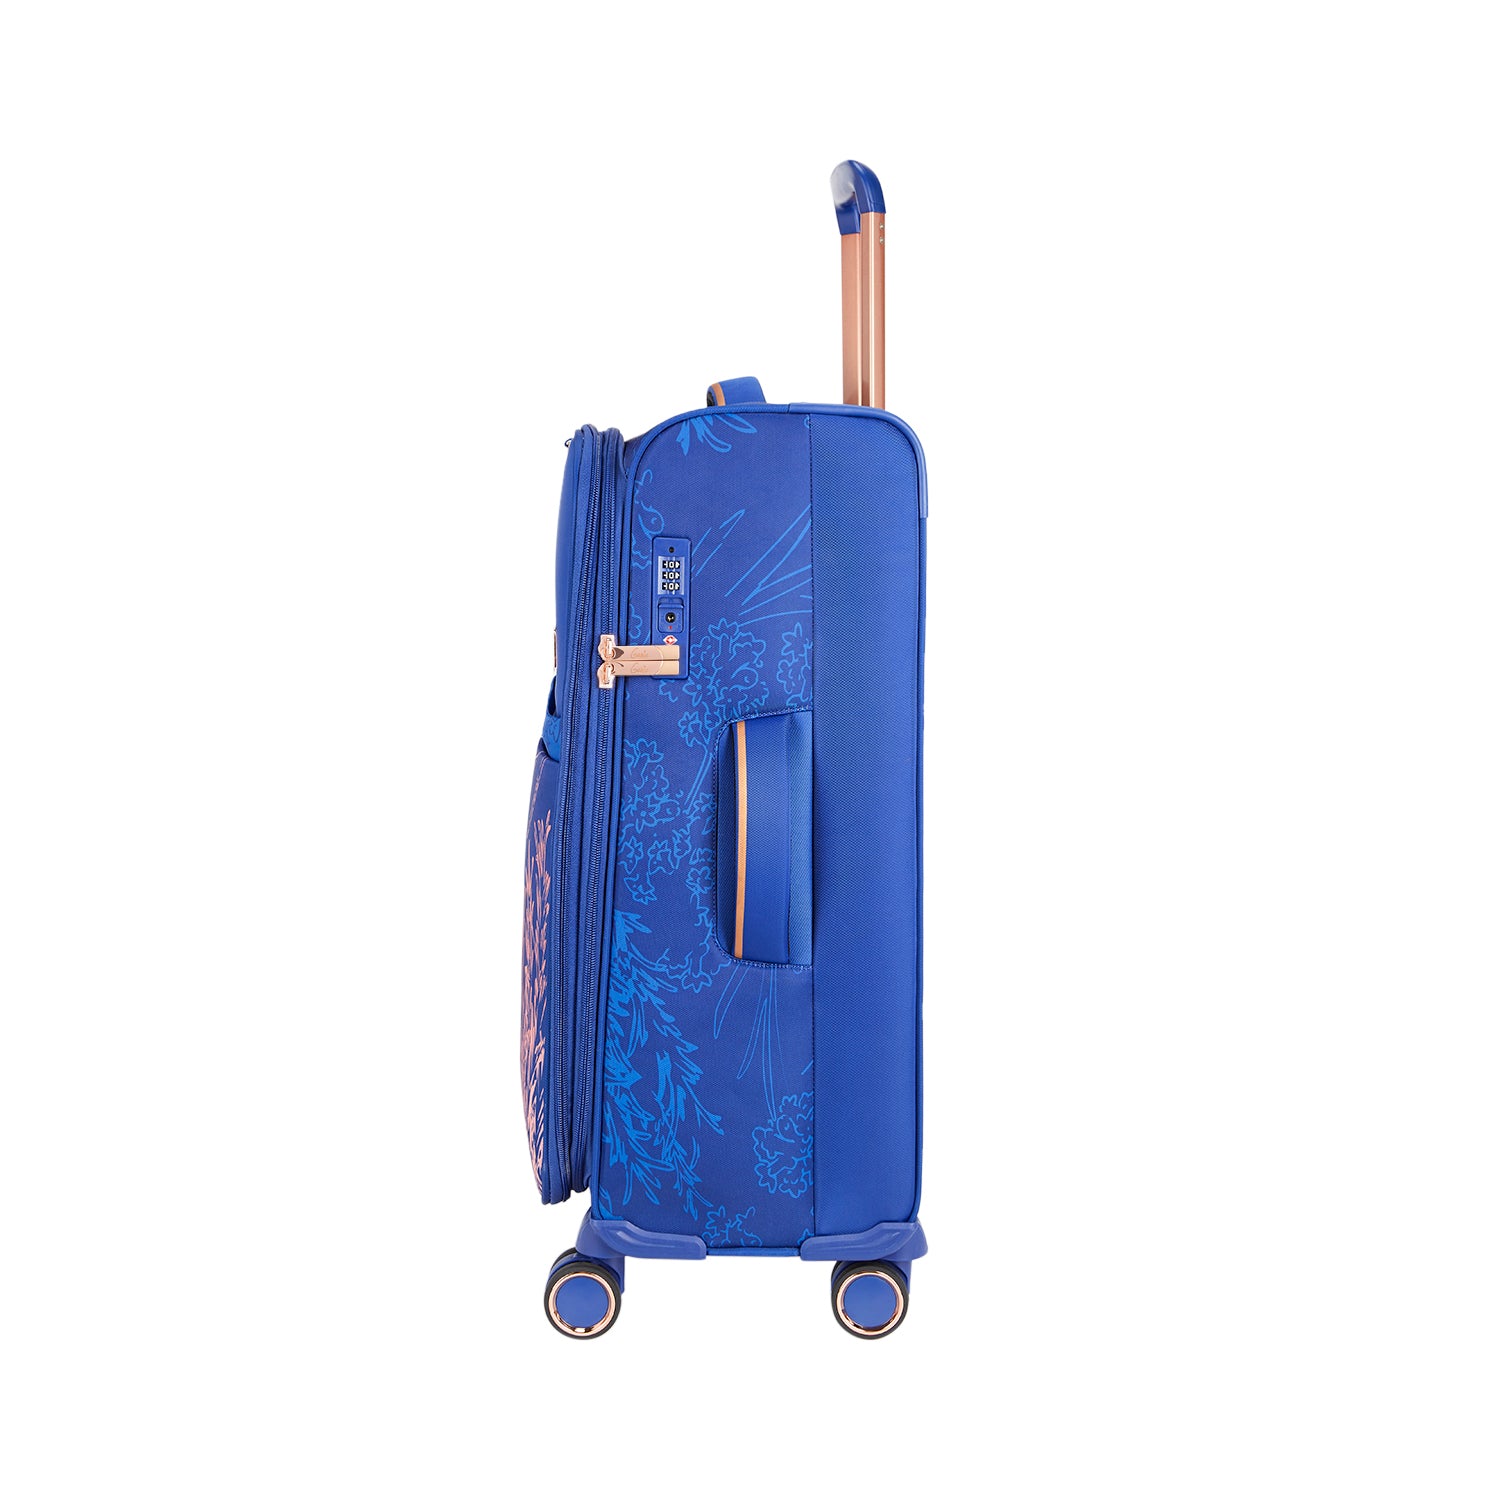 Bliss Small, Medium and Large Soft luggage Combo Set - Royal Blue